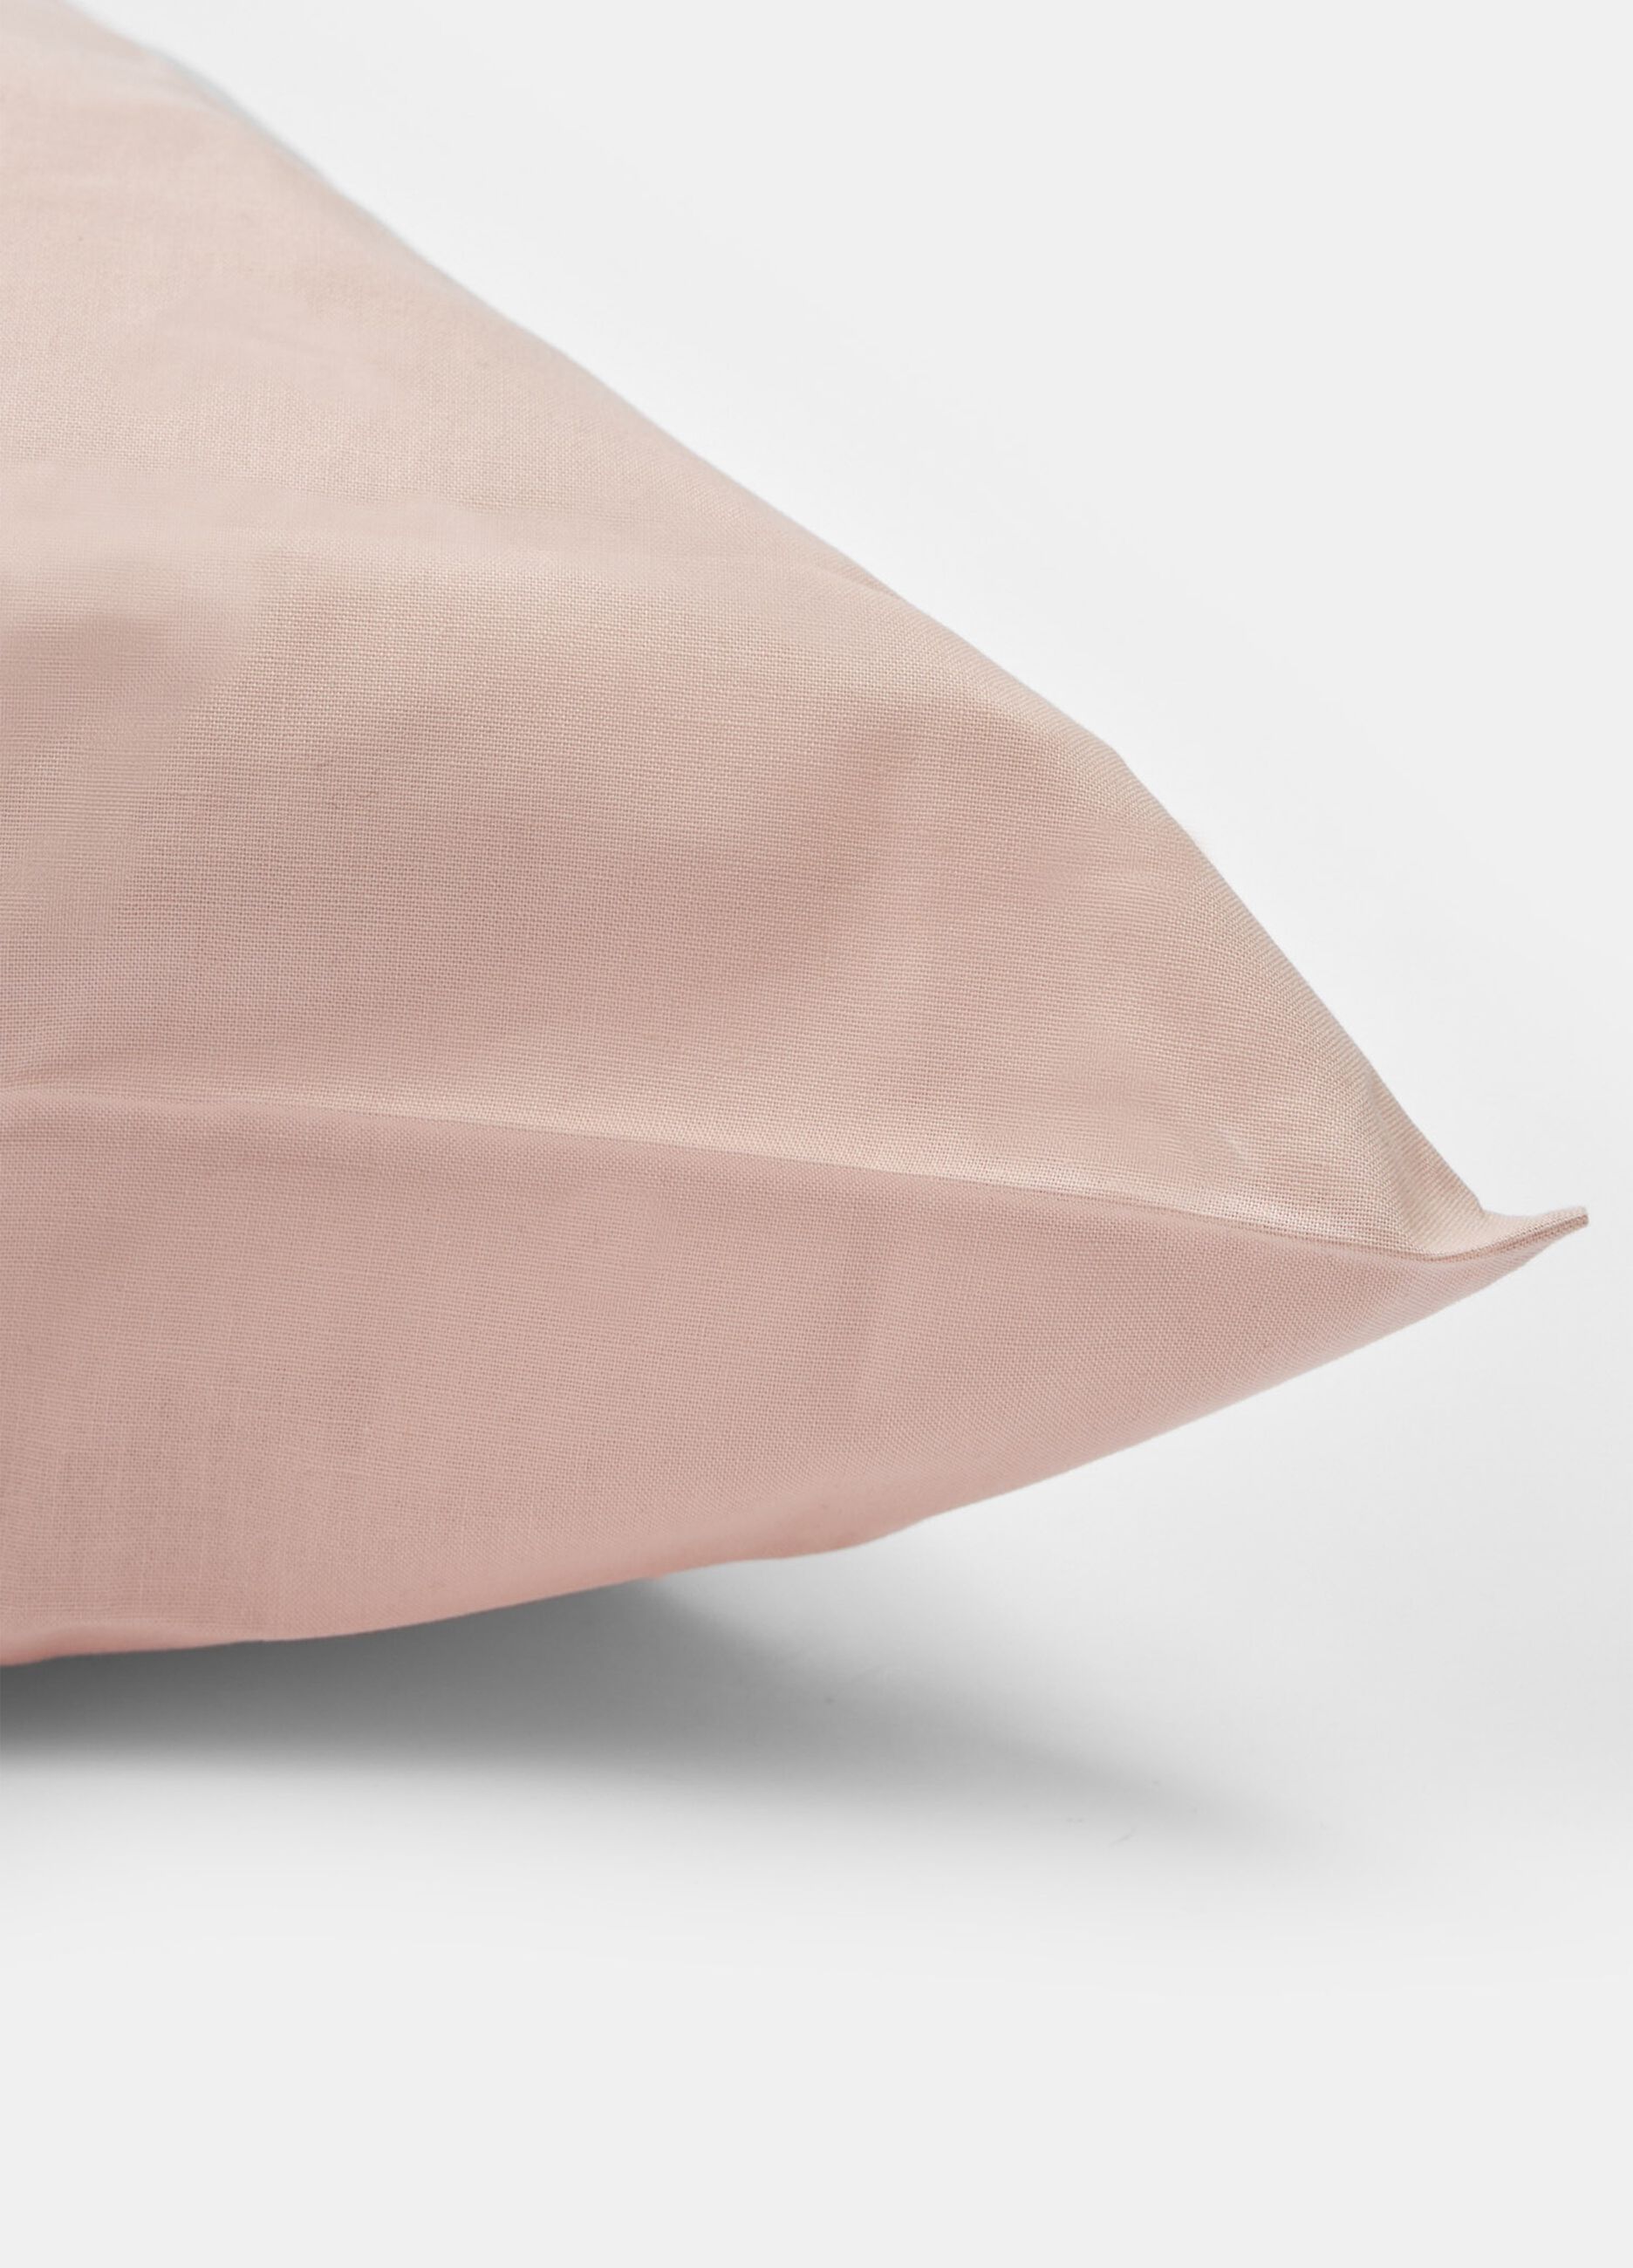 Pillowcase in cotton